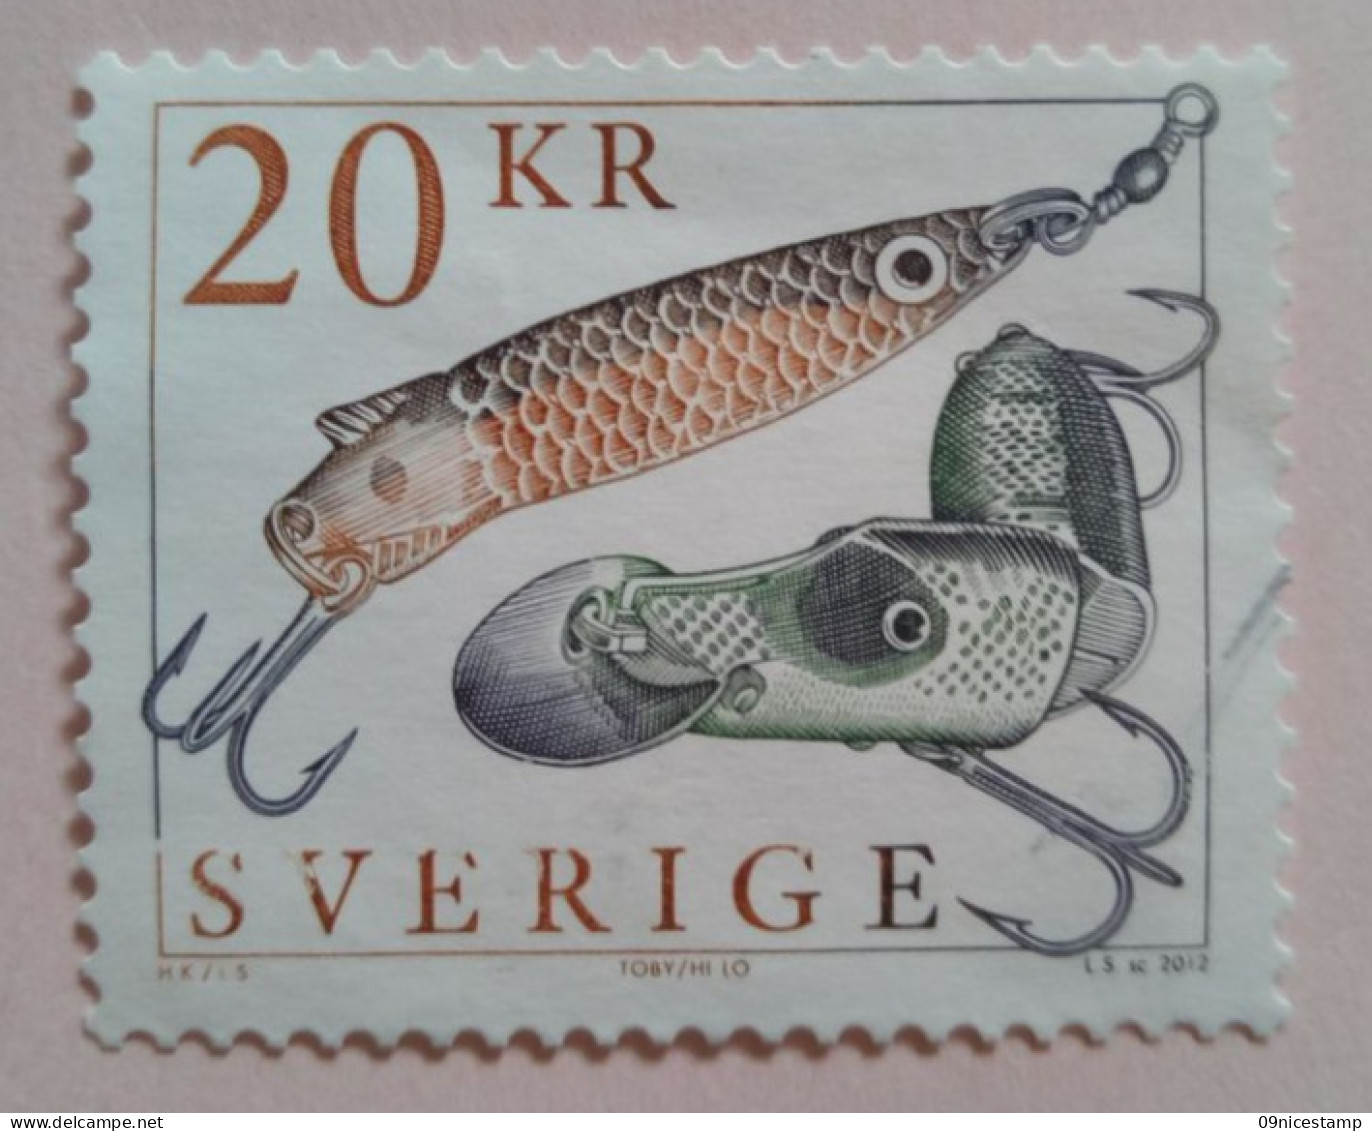 20 Kr Stamp From Sweden, Cancelled, Year 2012, Michel-Nr. 2874 - Oblitérés